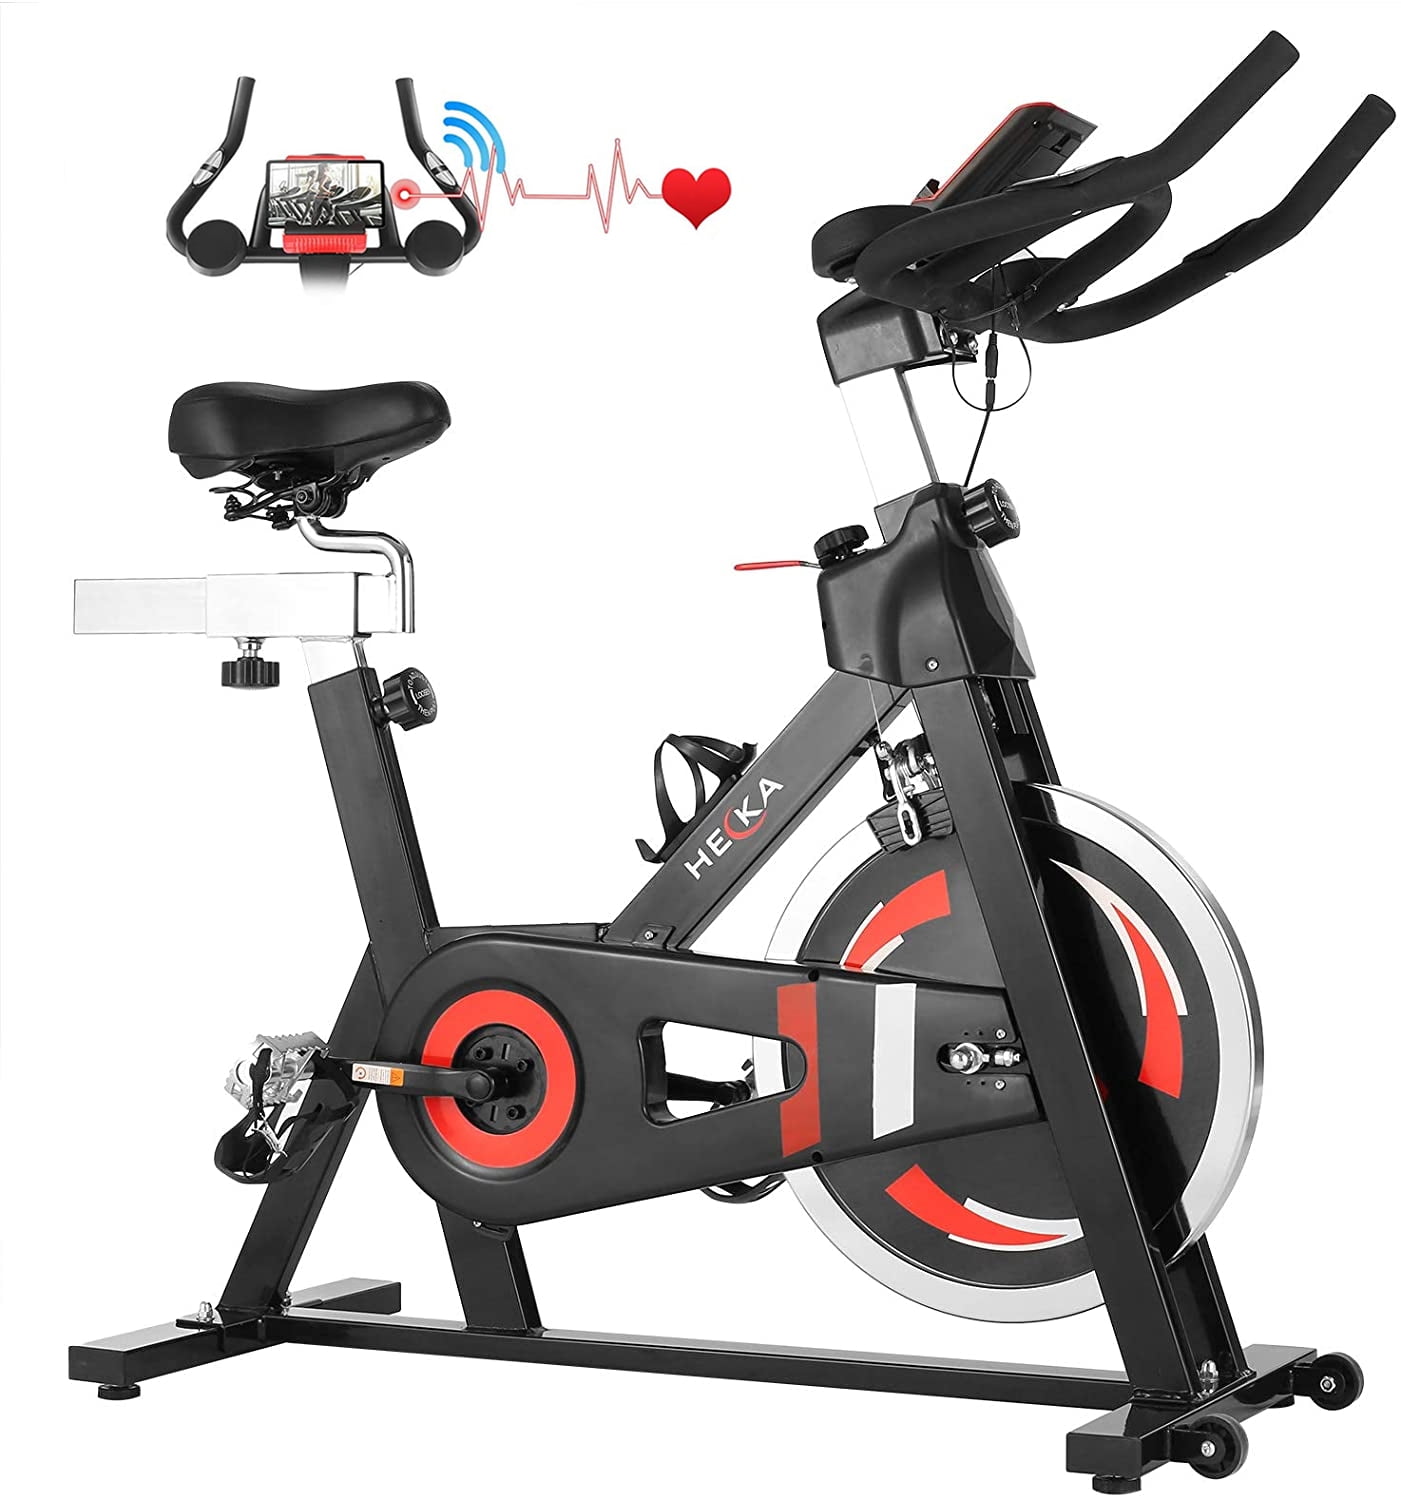 Heavy Duty Exercise Bike Adjustable Flywheel Cycling Home Cardio Fitness Workout 